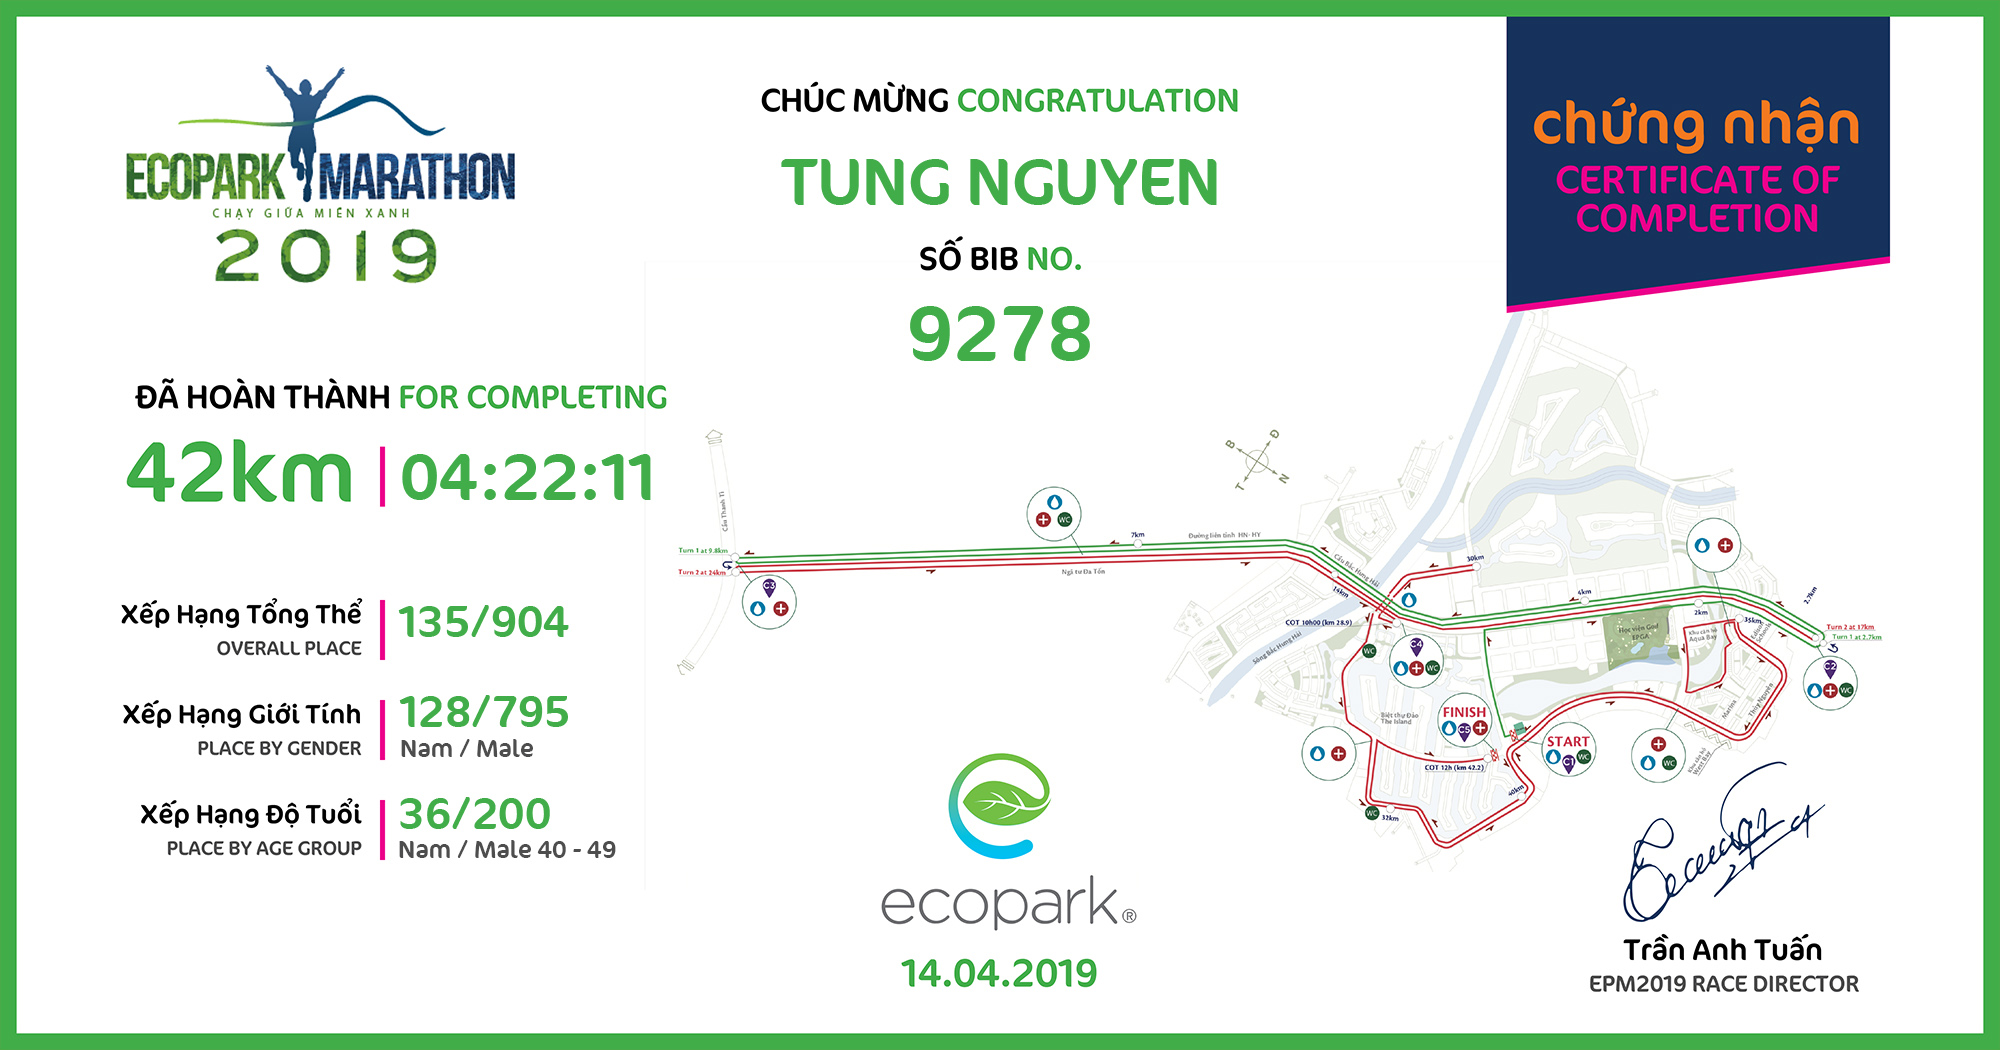 9278 - Tung Nguyen